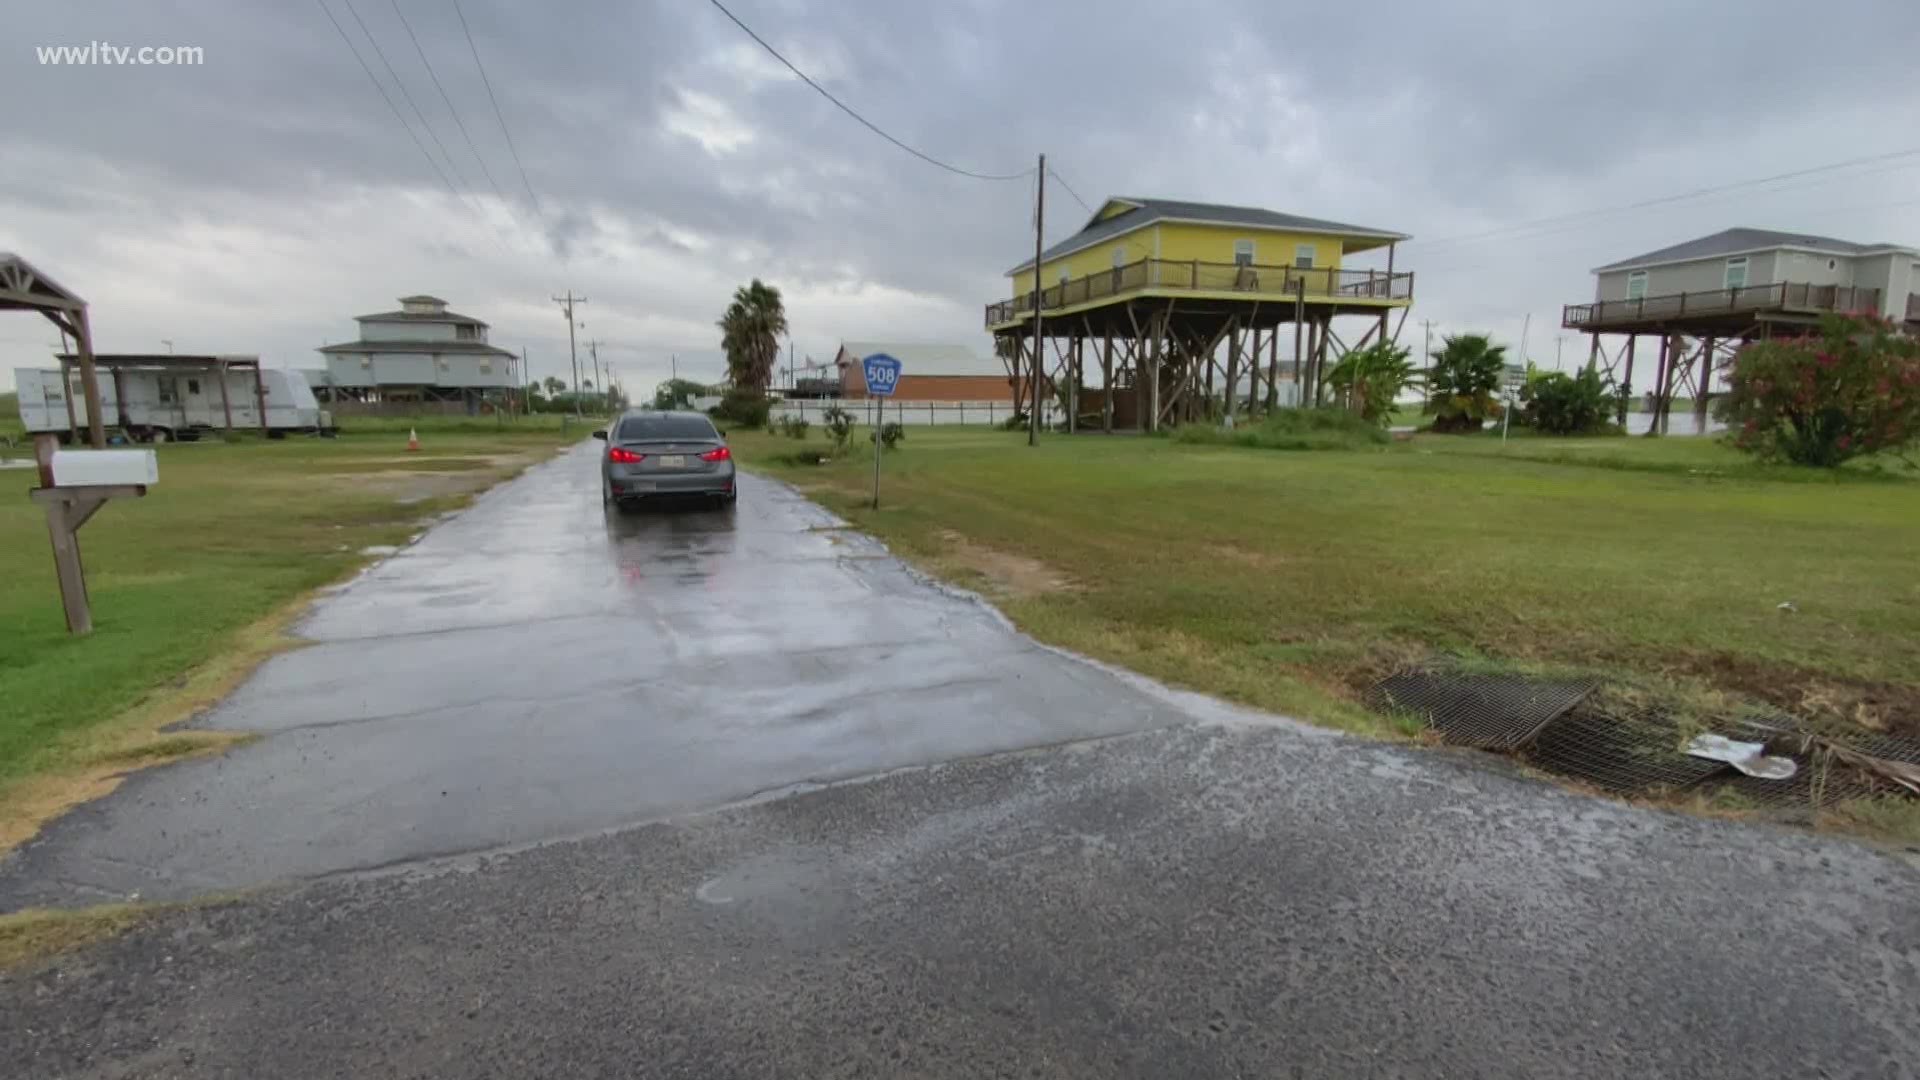 Cameron Parish residents evacuating as Hurricane Laura strengthens | www.waterandnature.org